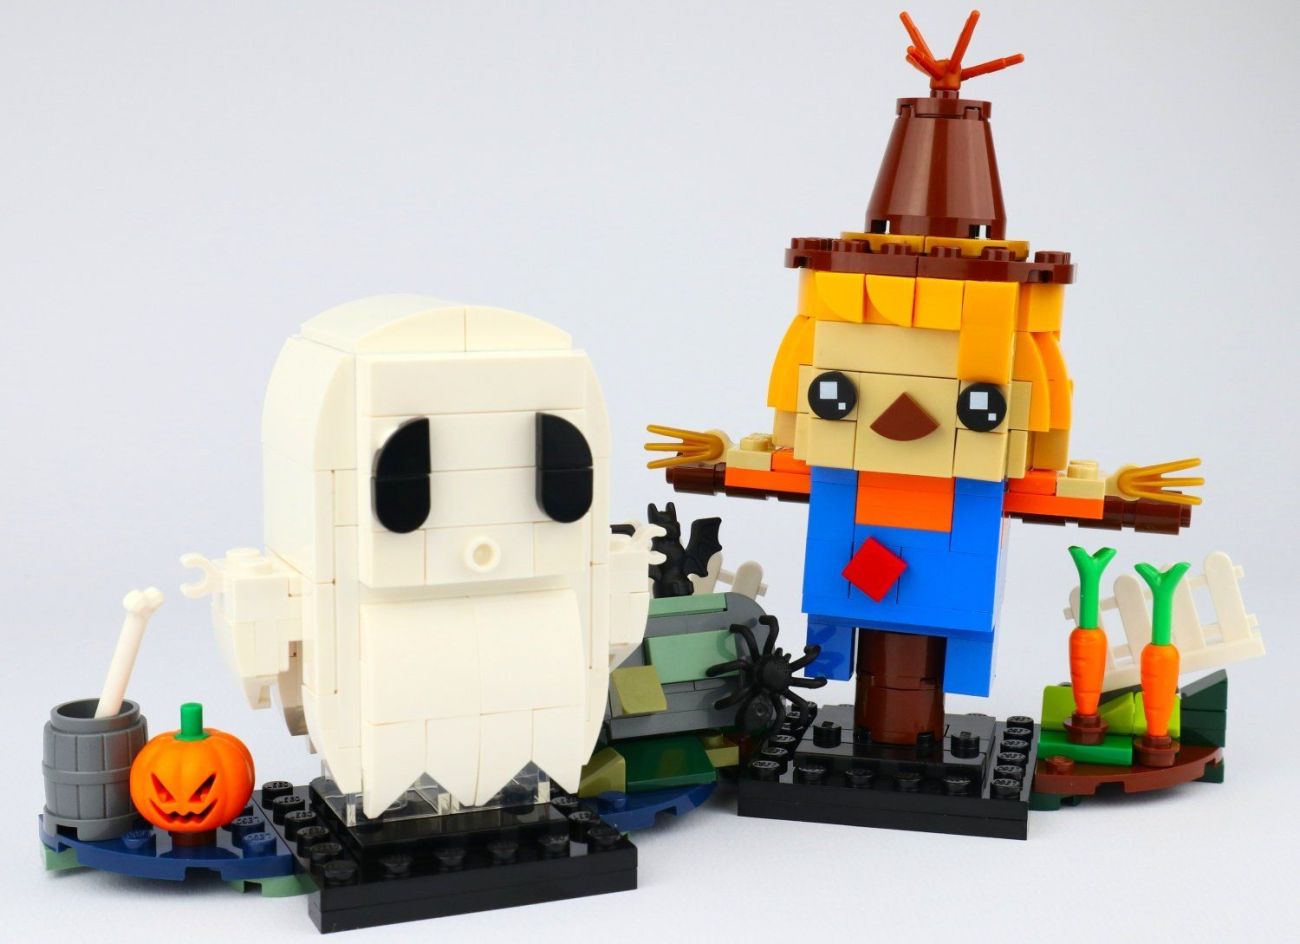 LEGO Seasonal BrickHeadz: Ghost und Scarecrow im Review